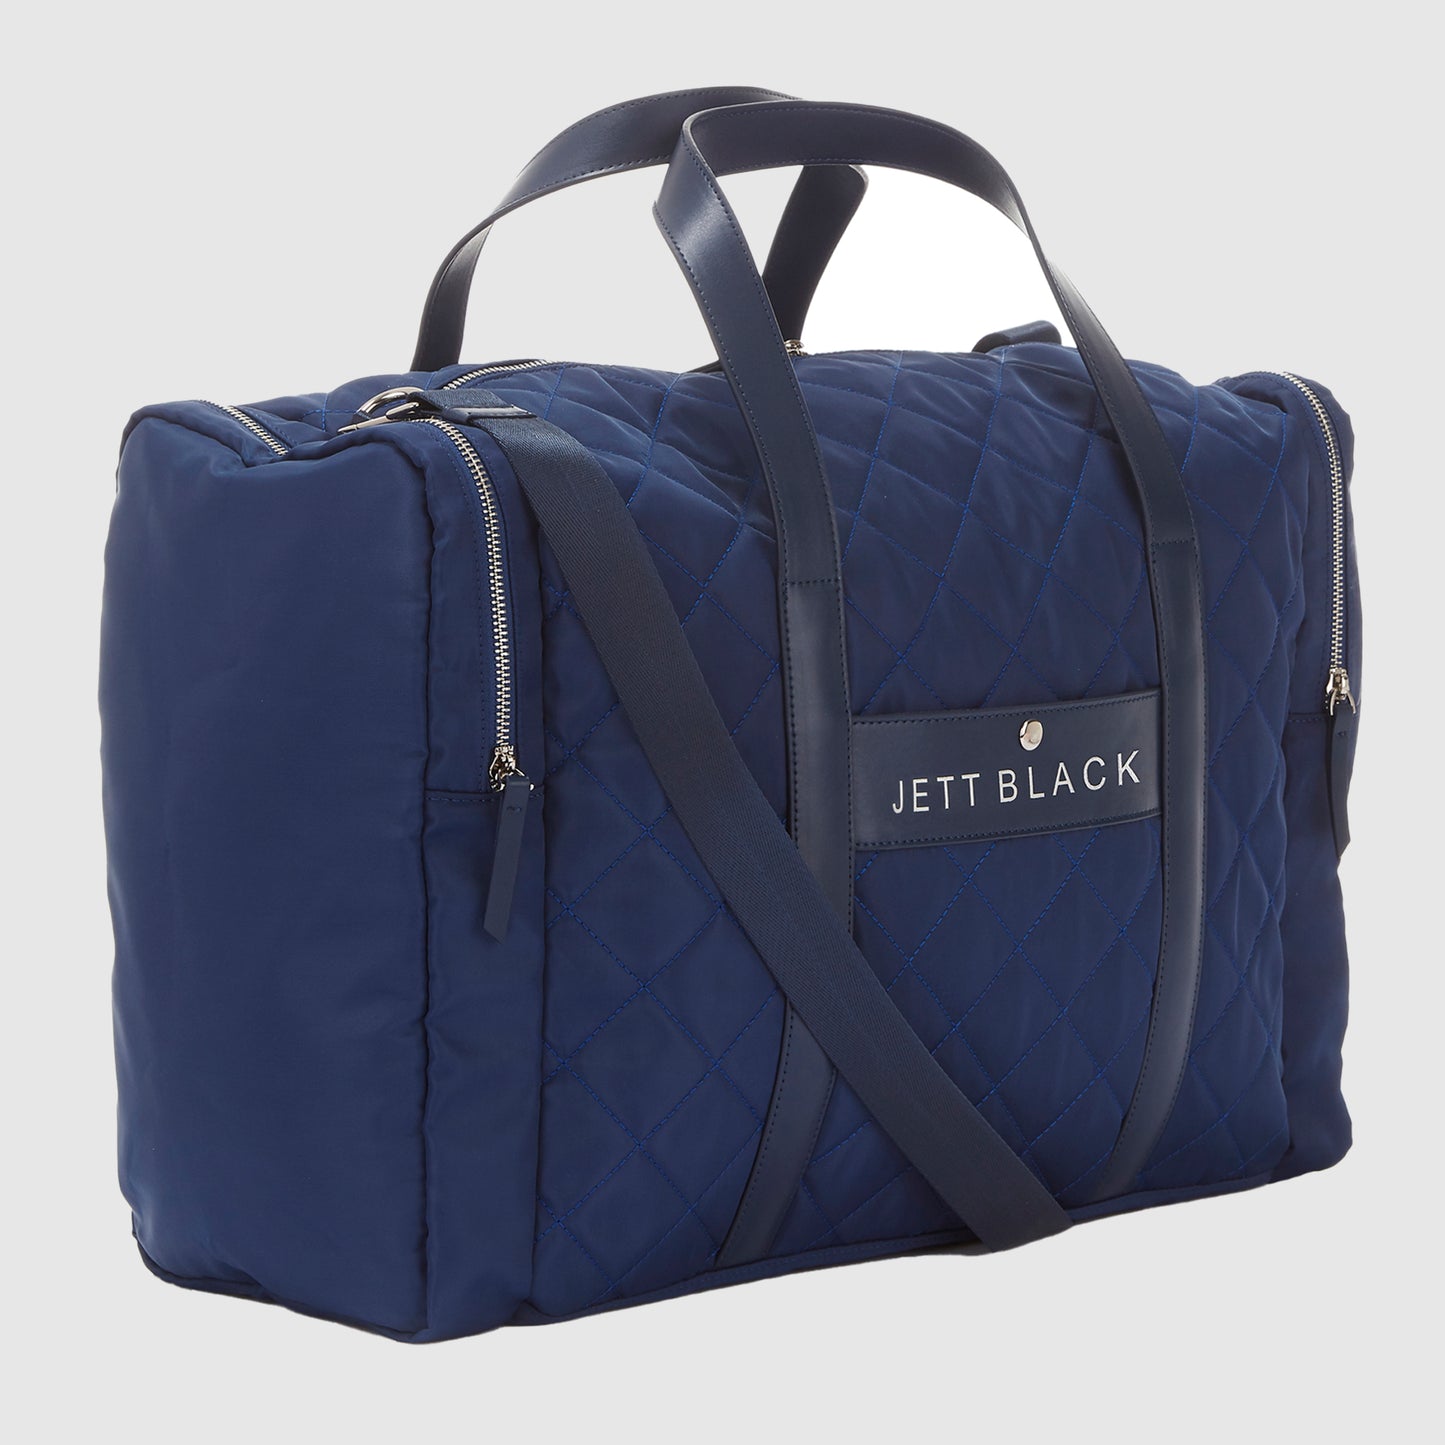 The London Blue Duffle Bag